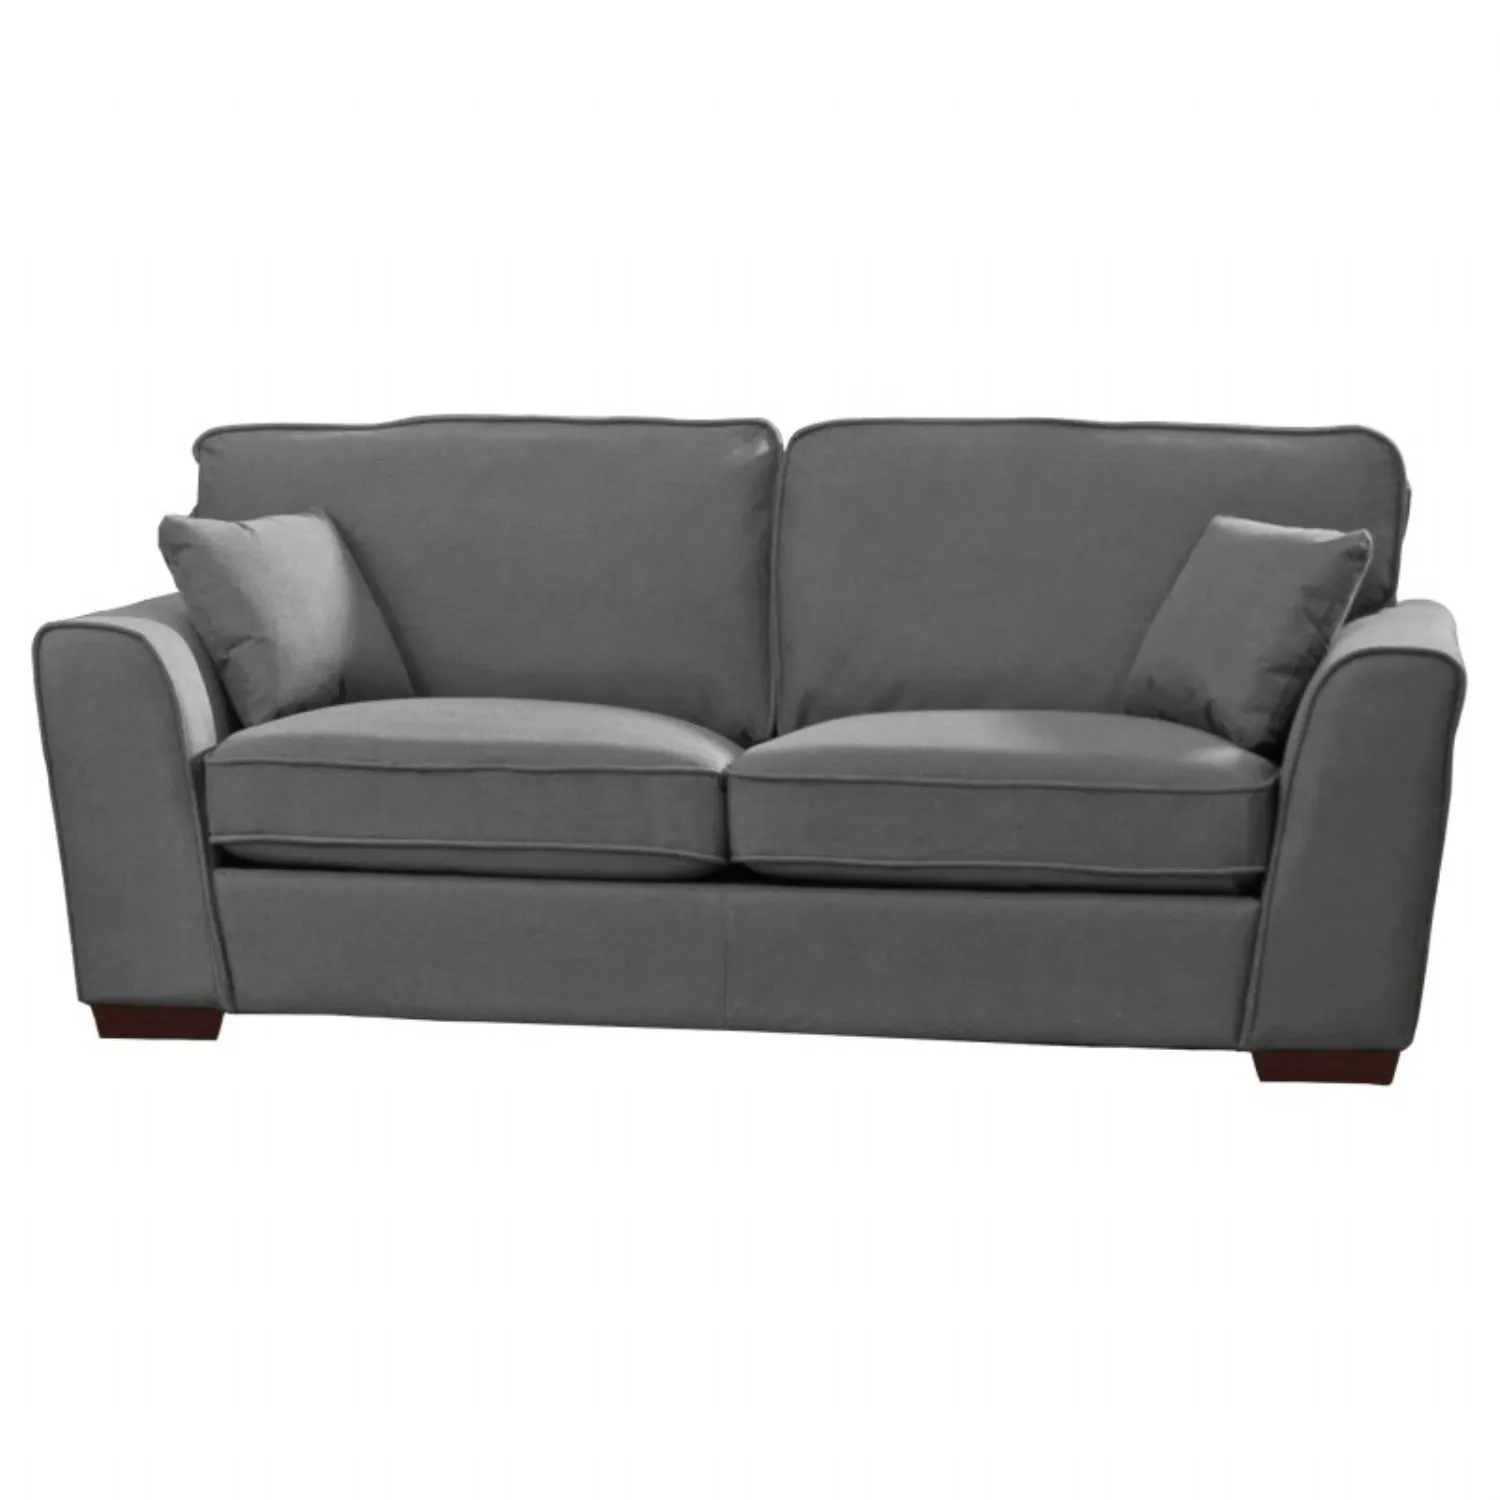 Herringbone Patterned Fabric 3 Seat Sofas